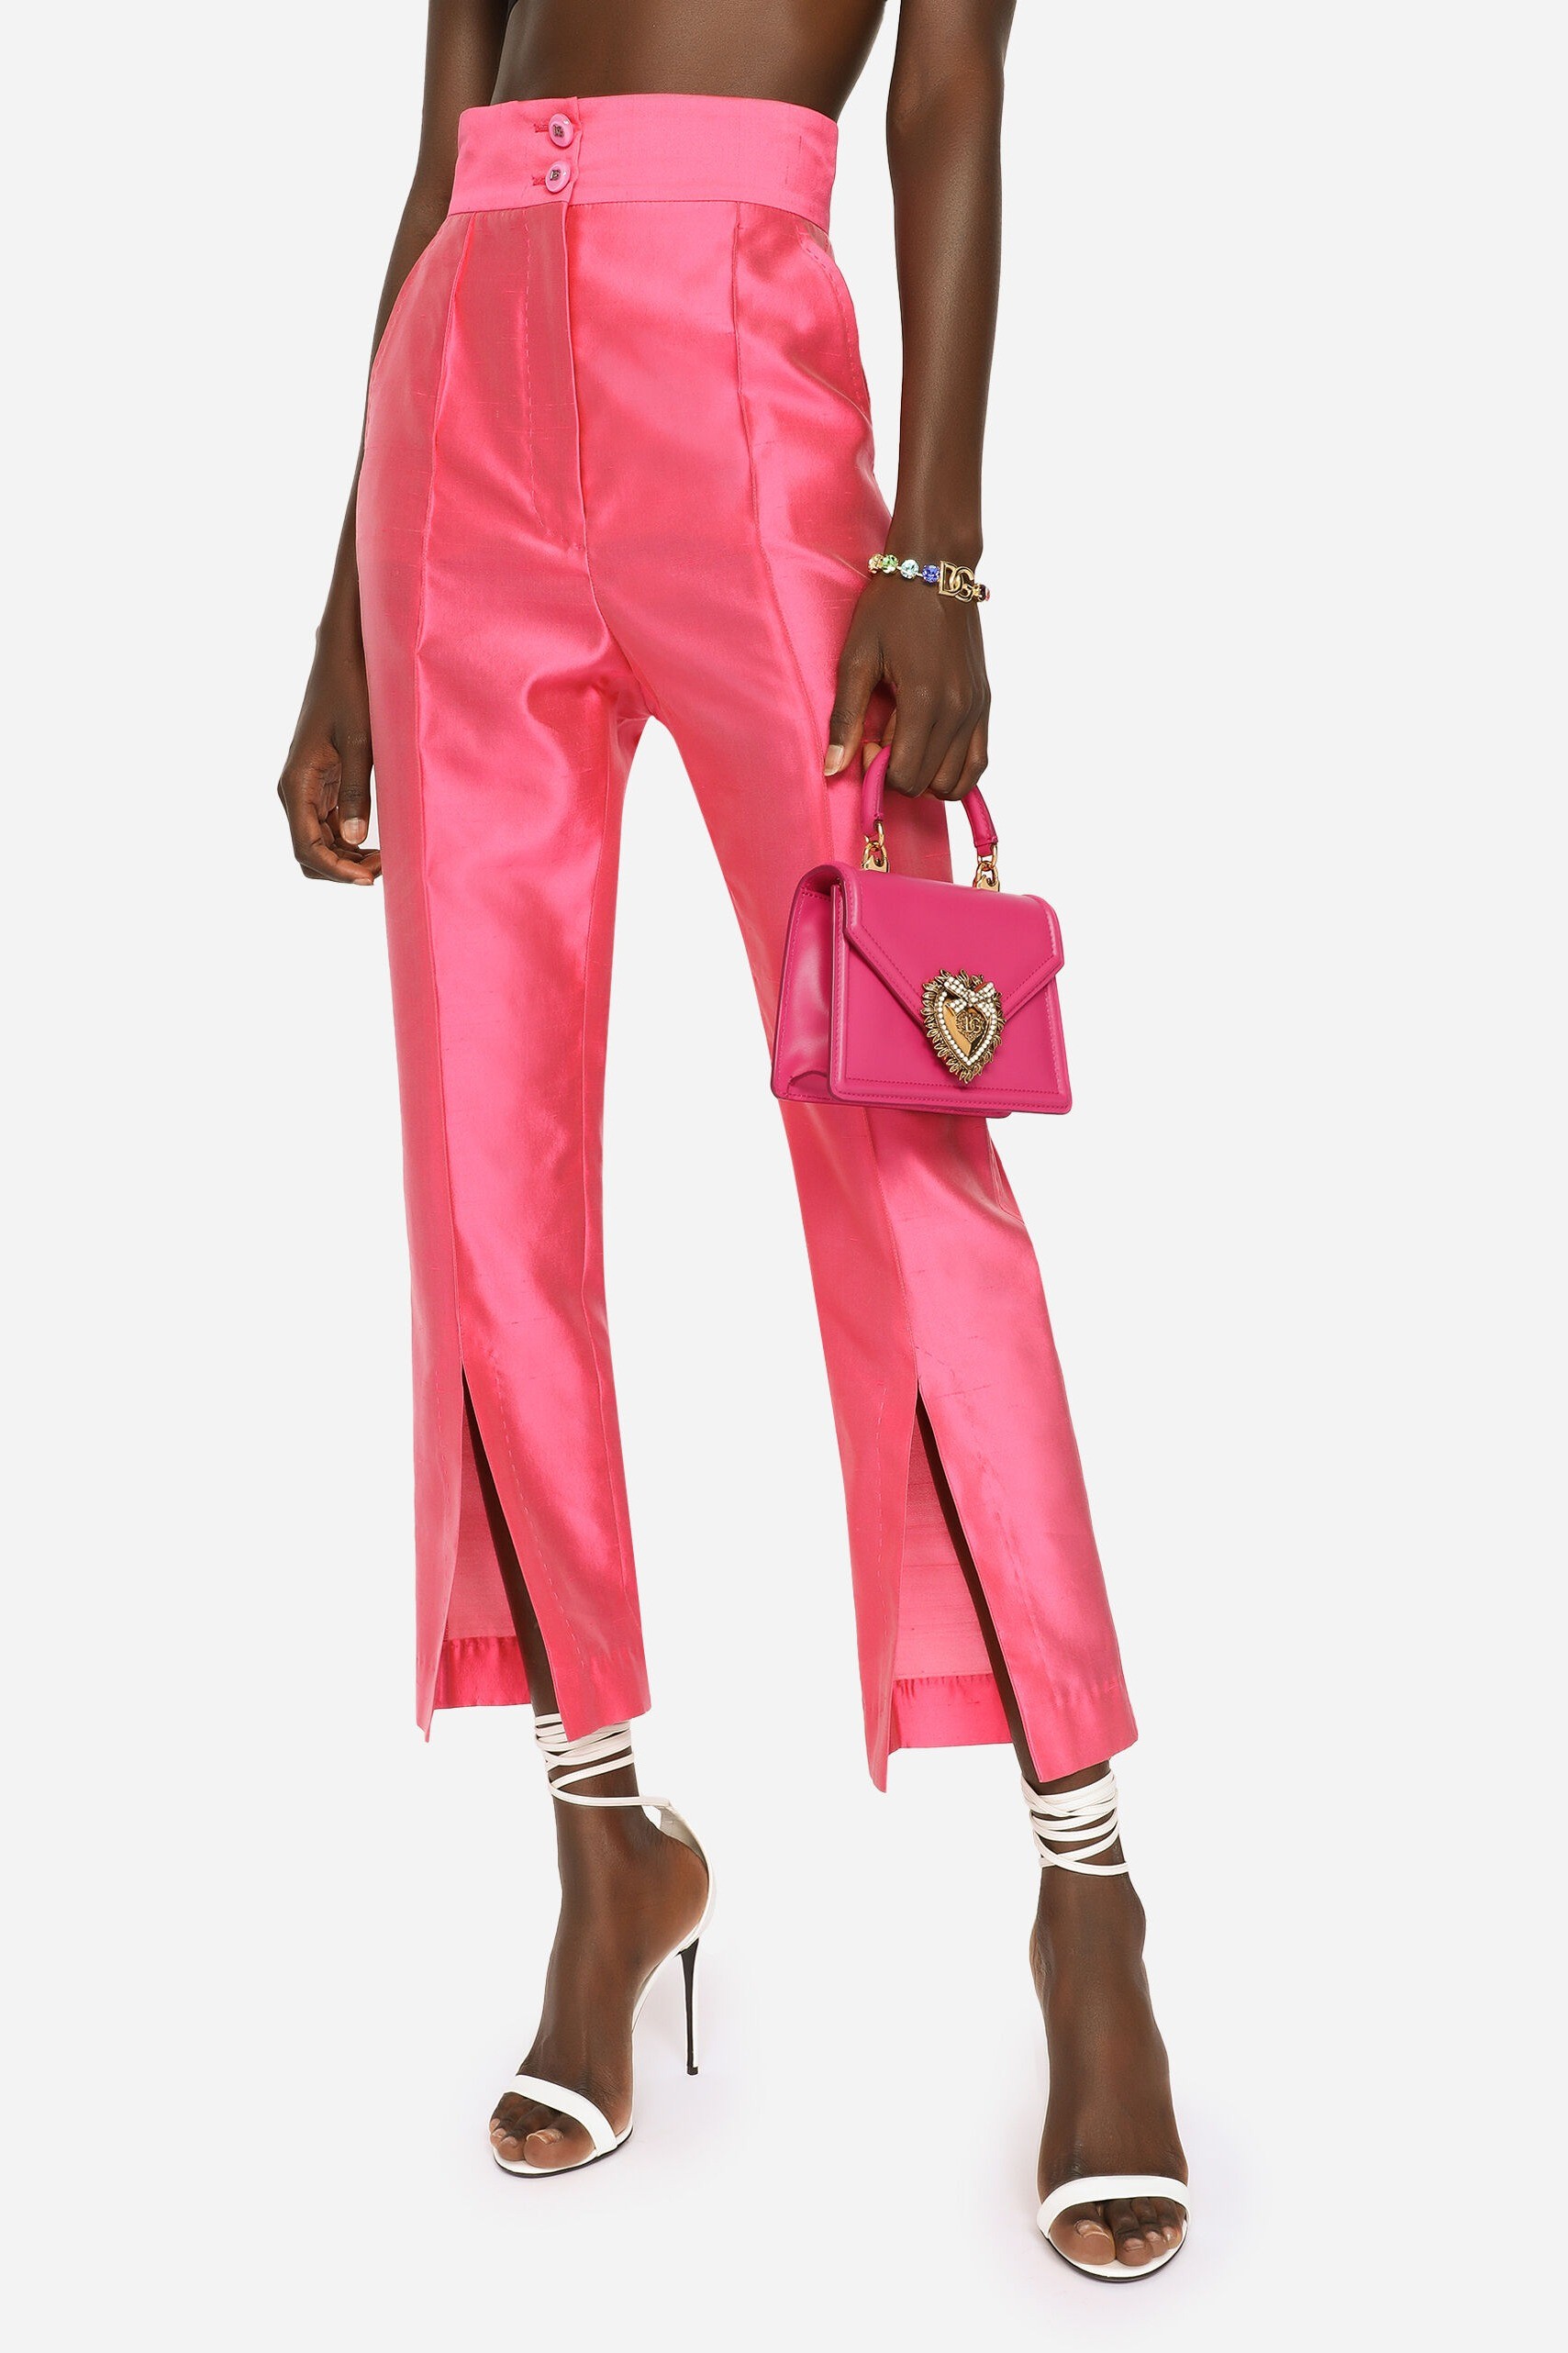 Dolce & Gabbana - Small smooth calfskin Devotion bag - Pink